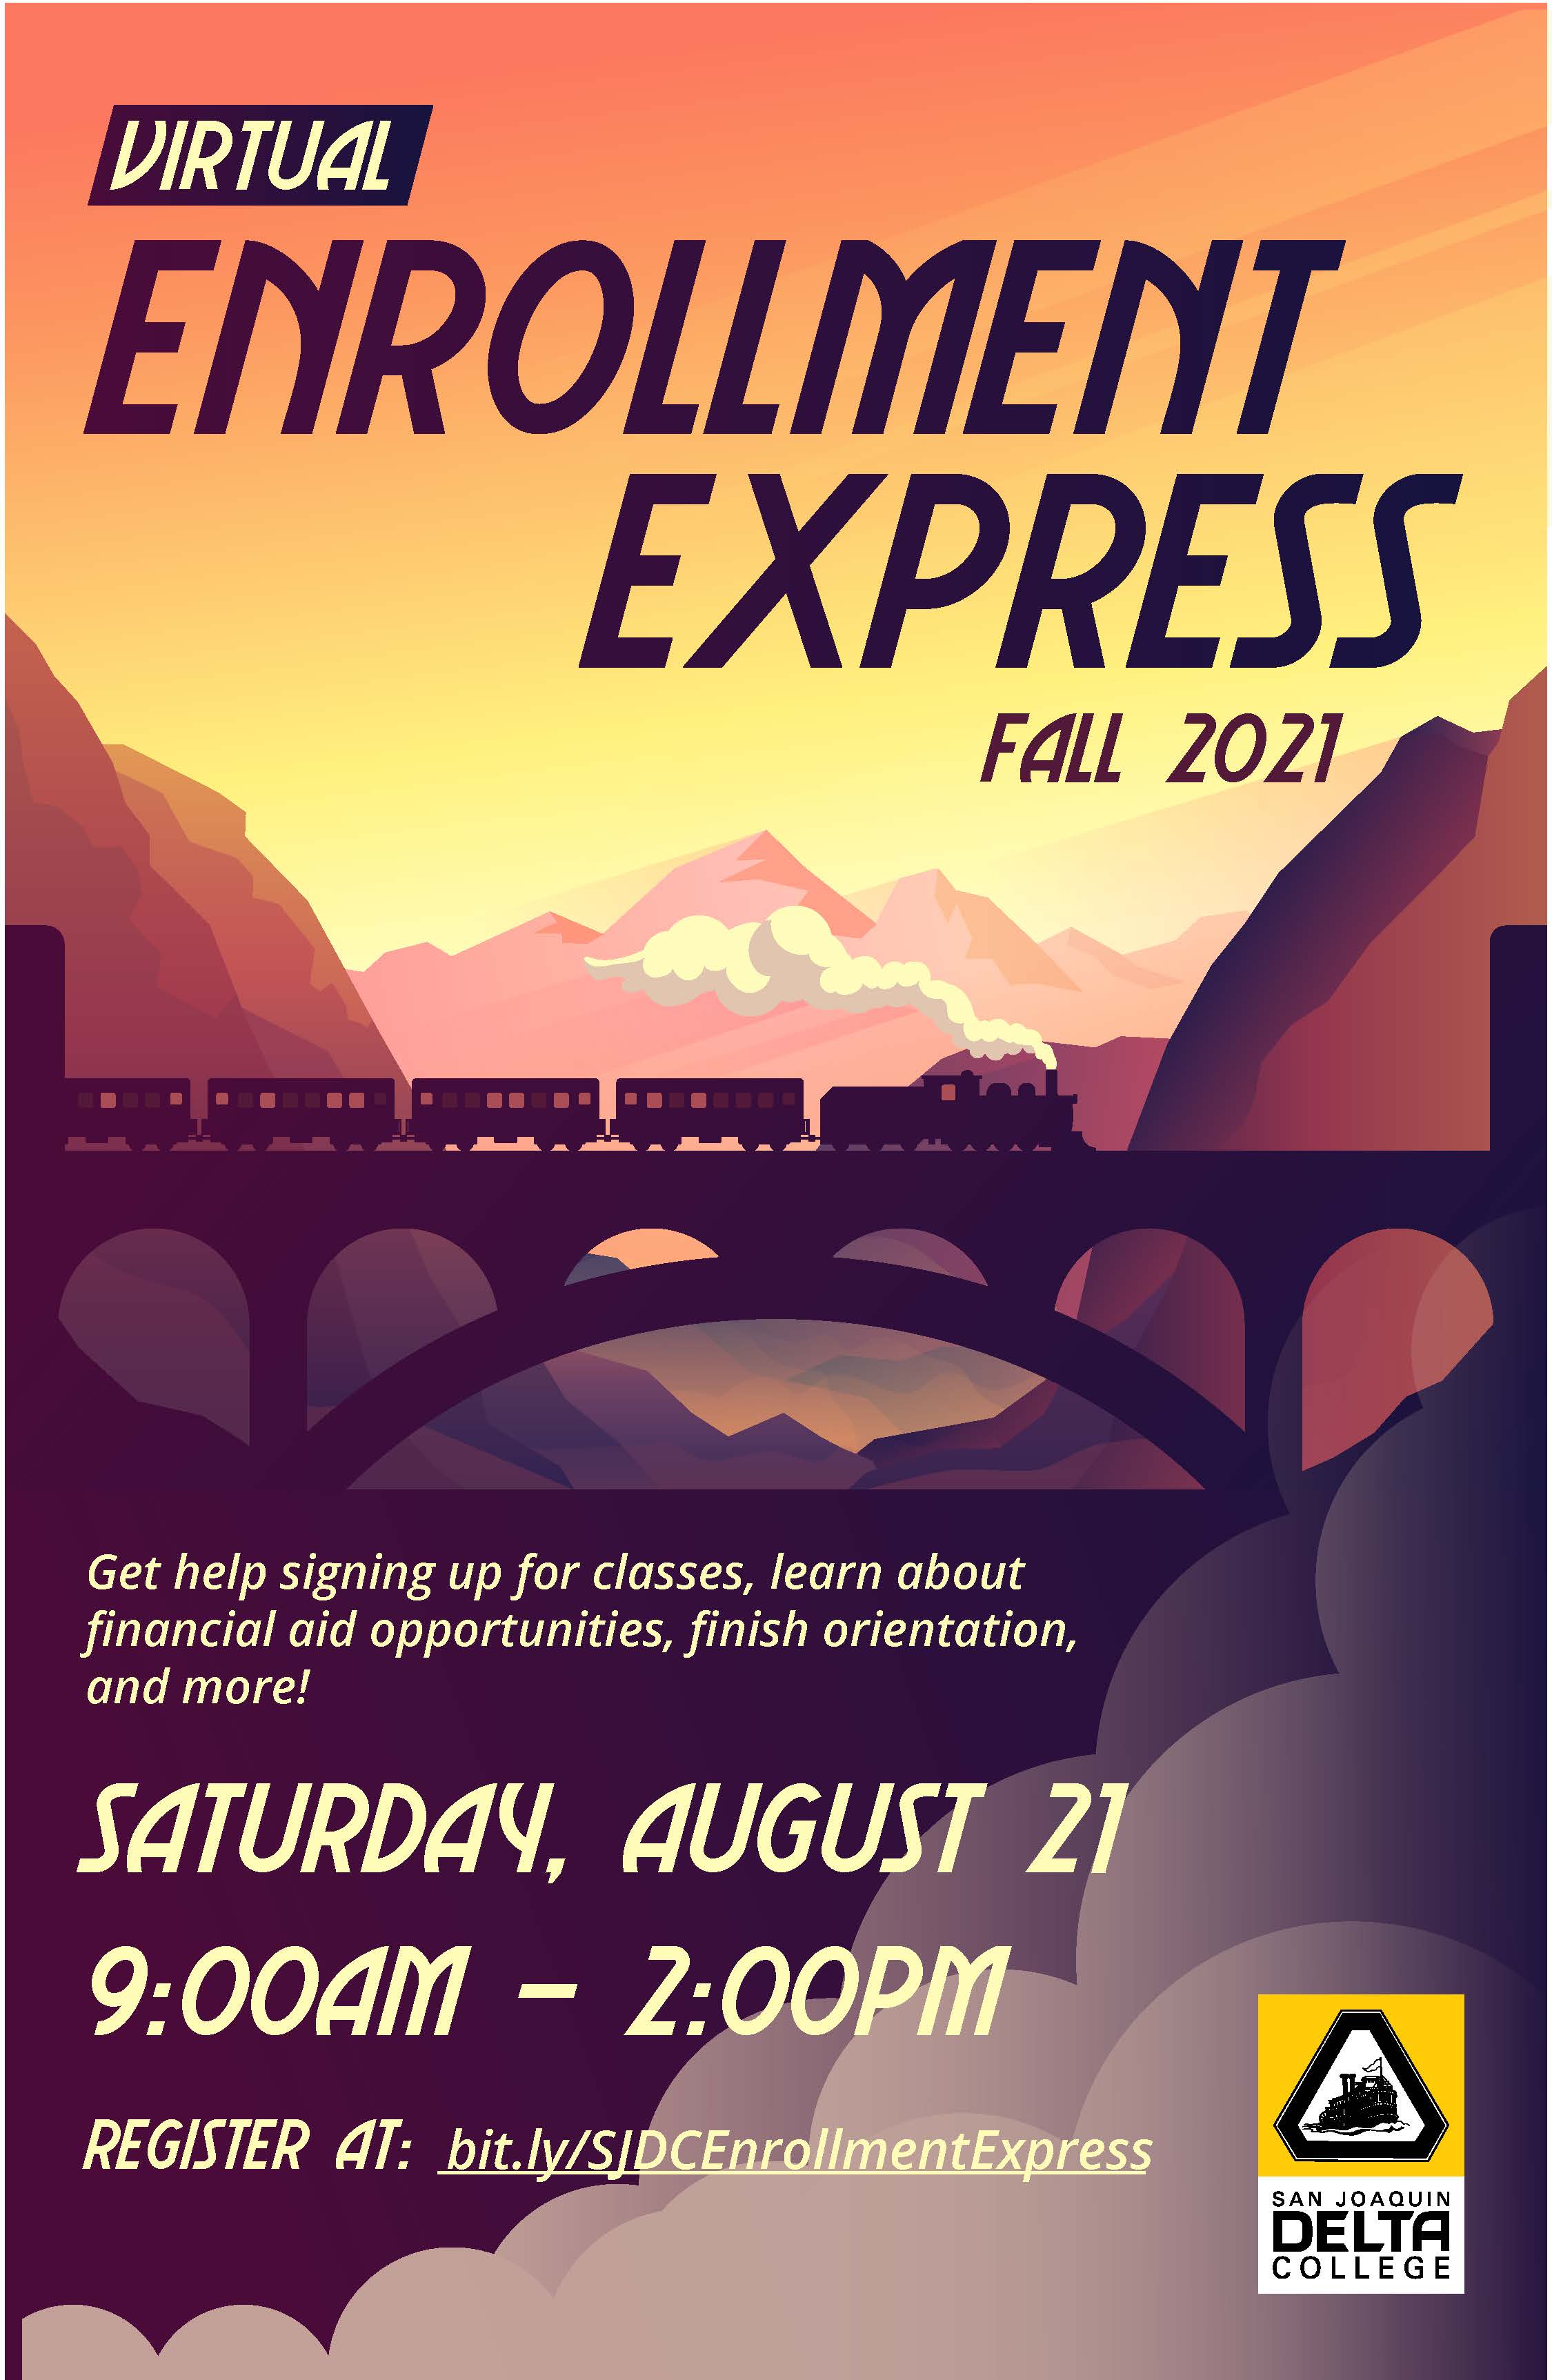 Enrollment Express to arrive (virtually) Saturday, Aug. 21 San